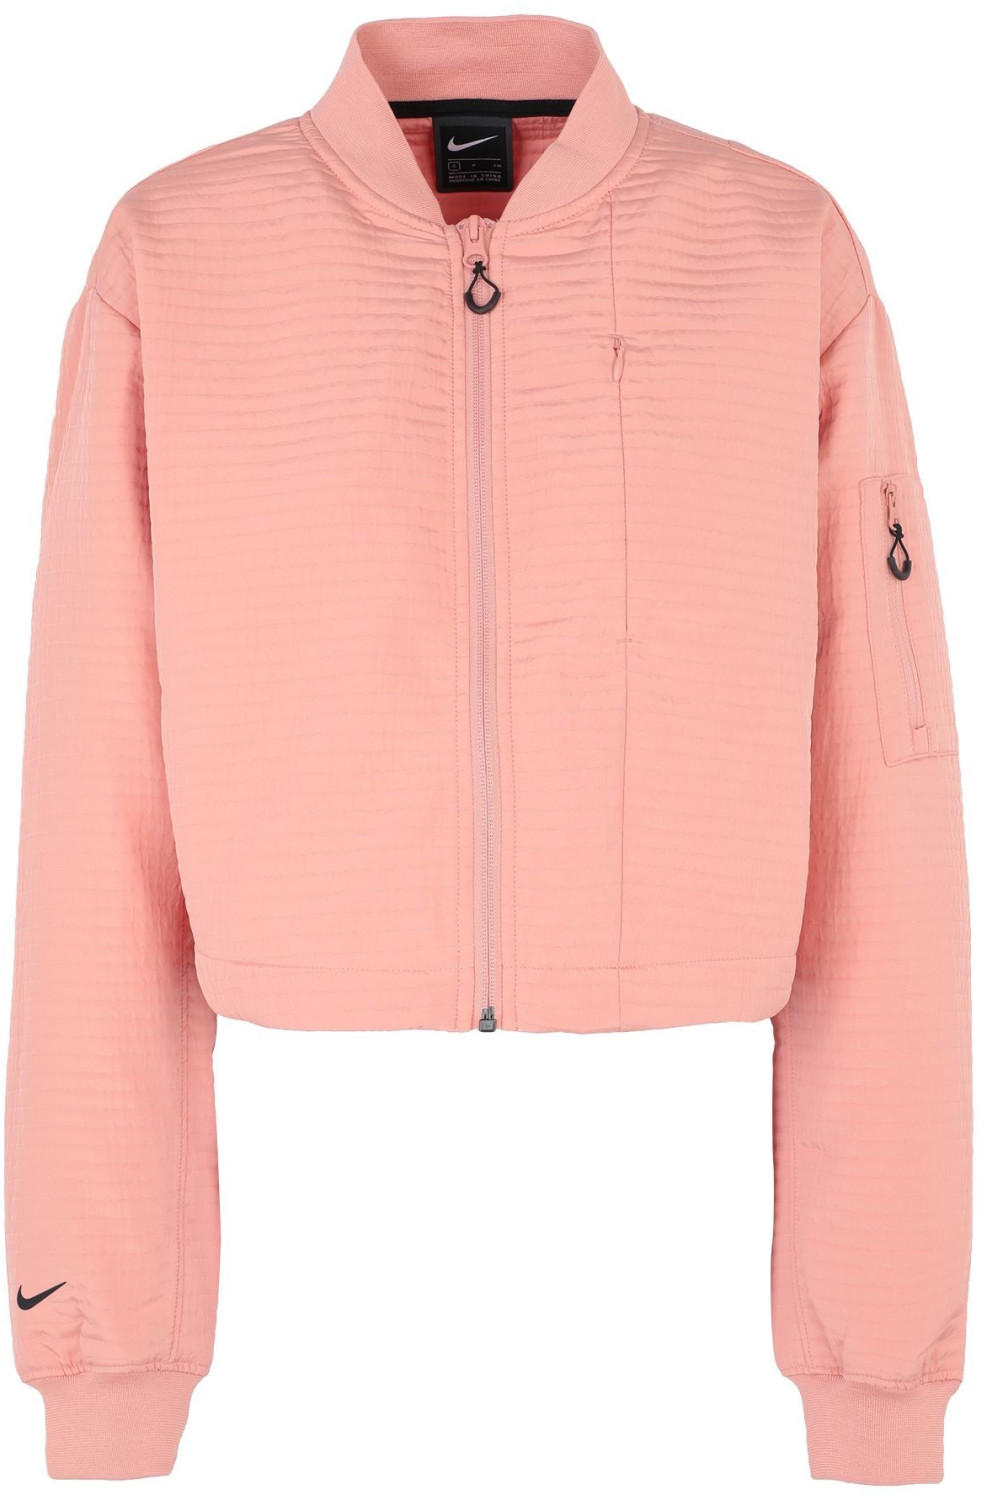 Nike Sportswear Tech Pack Jacket pink quartz/black